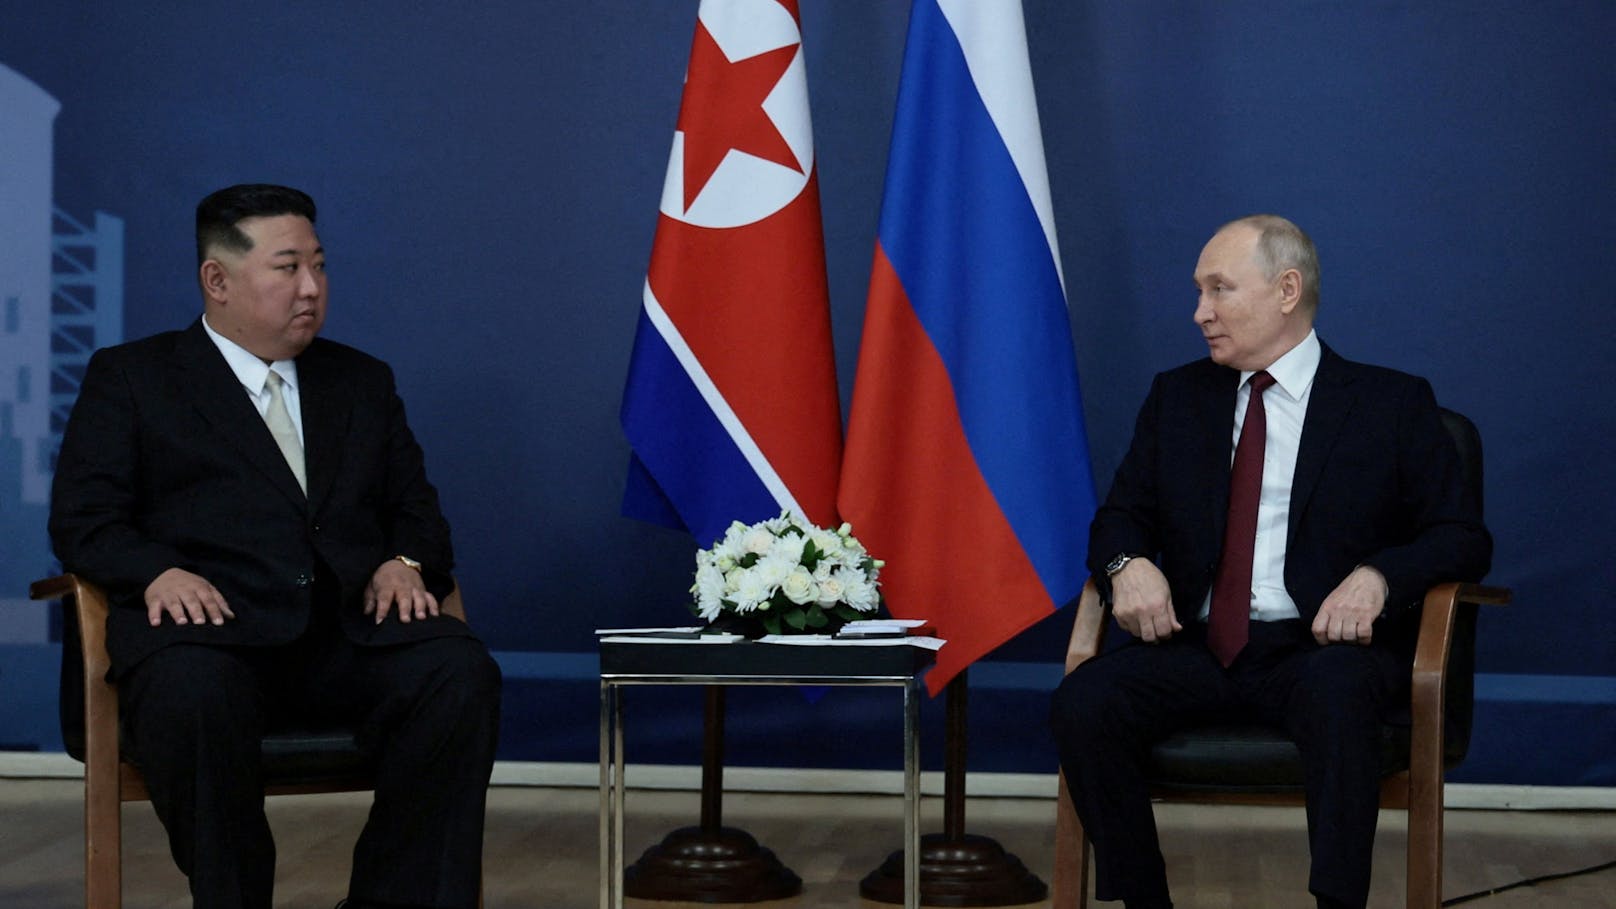 Putin nimmt Einladung nach Nordkorea an